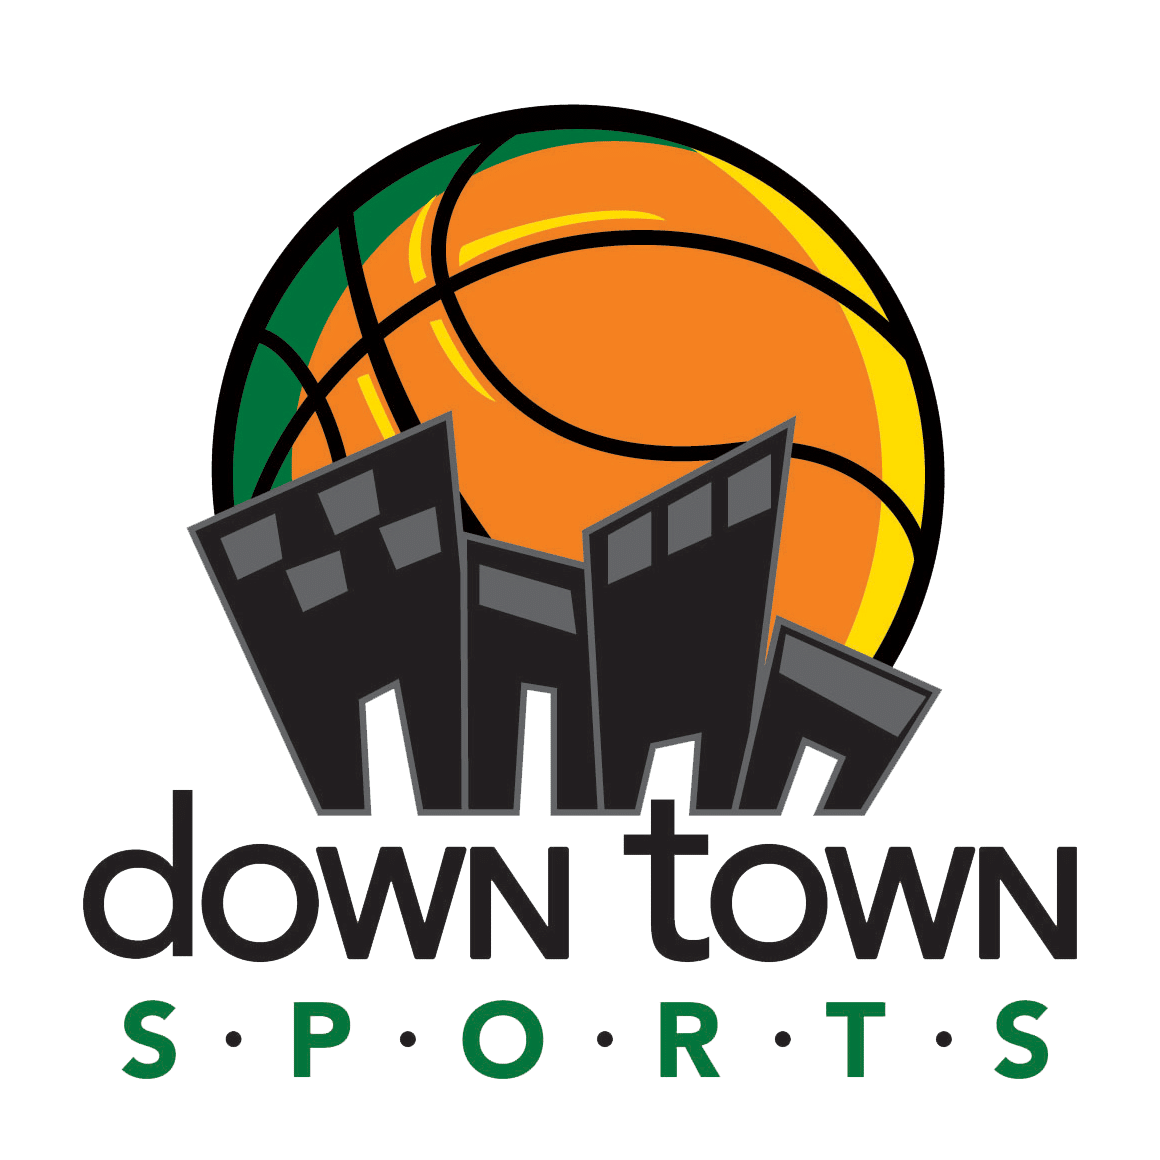 (c) Downtownsportsclub.com